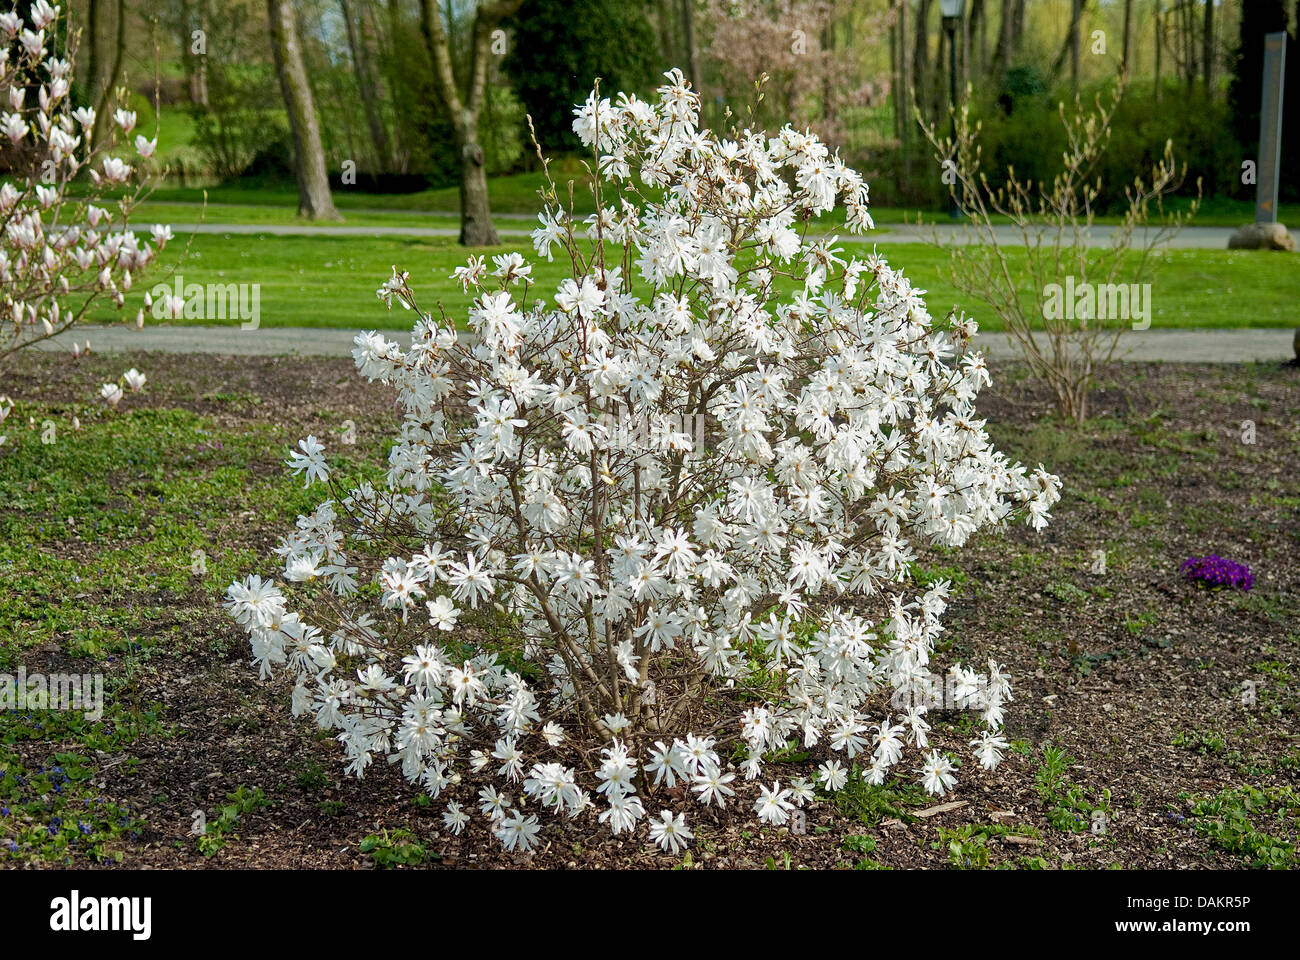 star magnolia (Magnolia stellata 'Royal Star', Magnolia stellata Royal Star), cultivar Royal Star, Germany Stock Photo